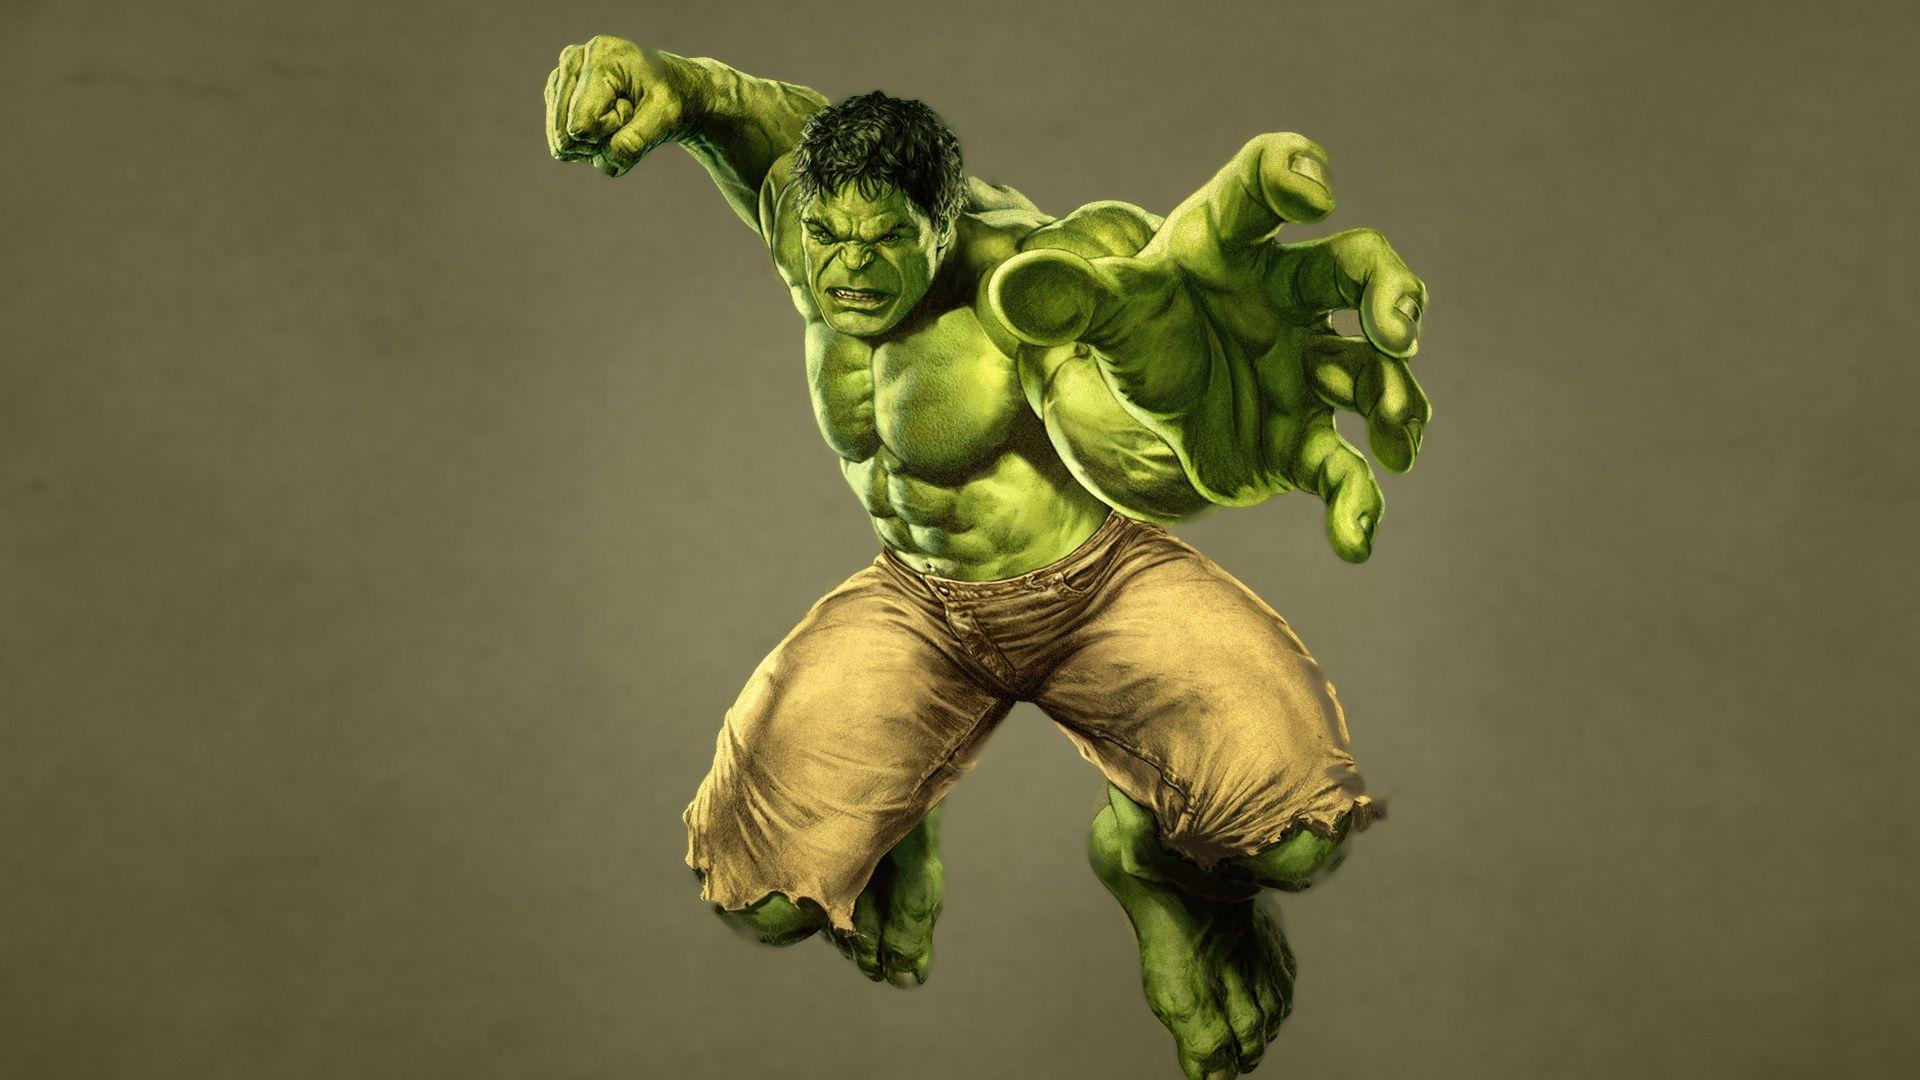 Hulk Wallpaper HD. Wallpaper, Background, Image, Art Photo